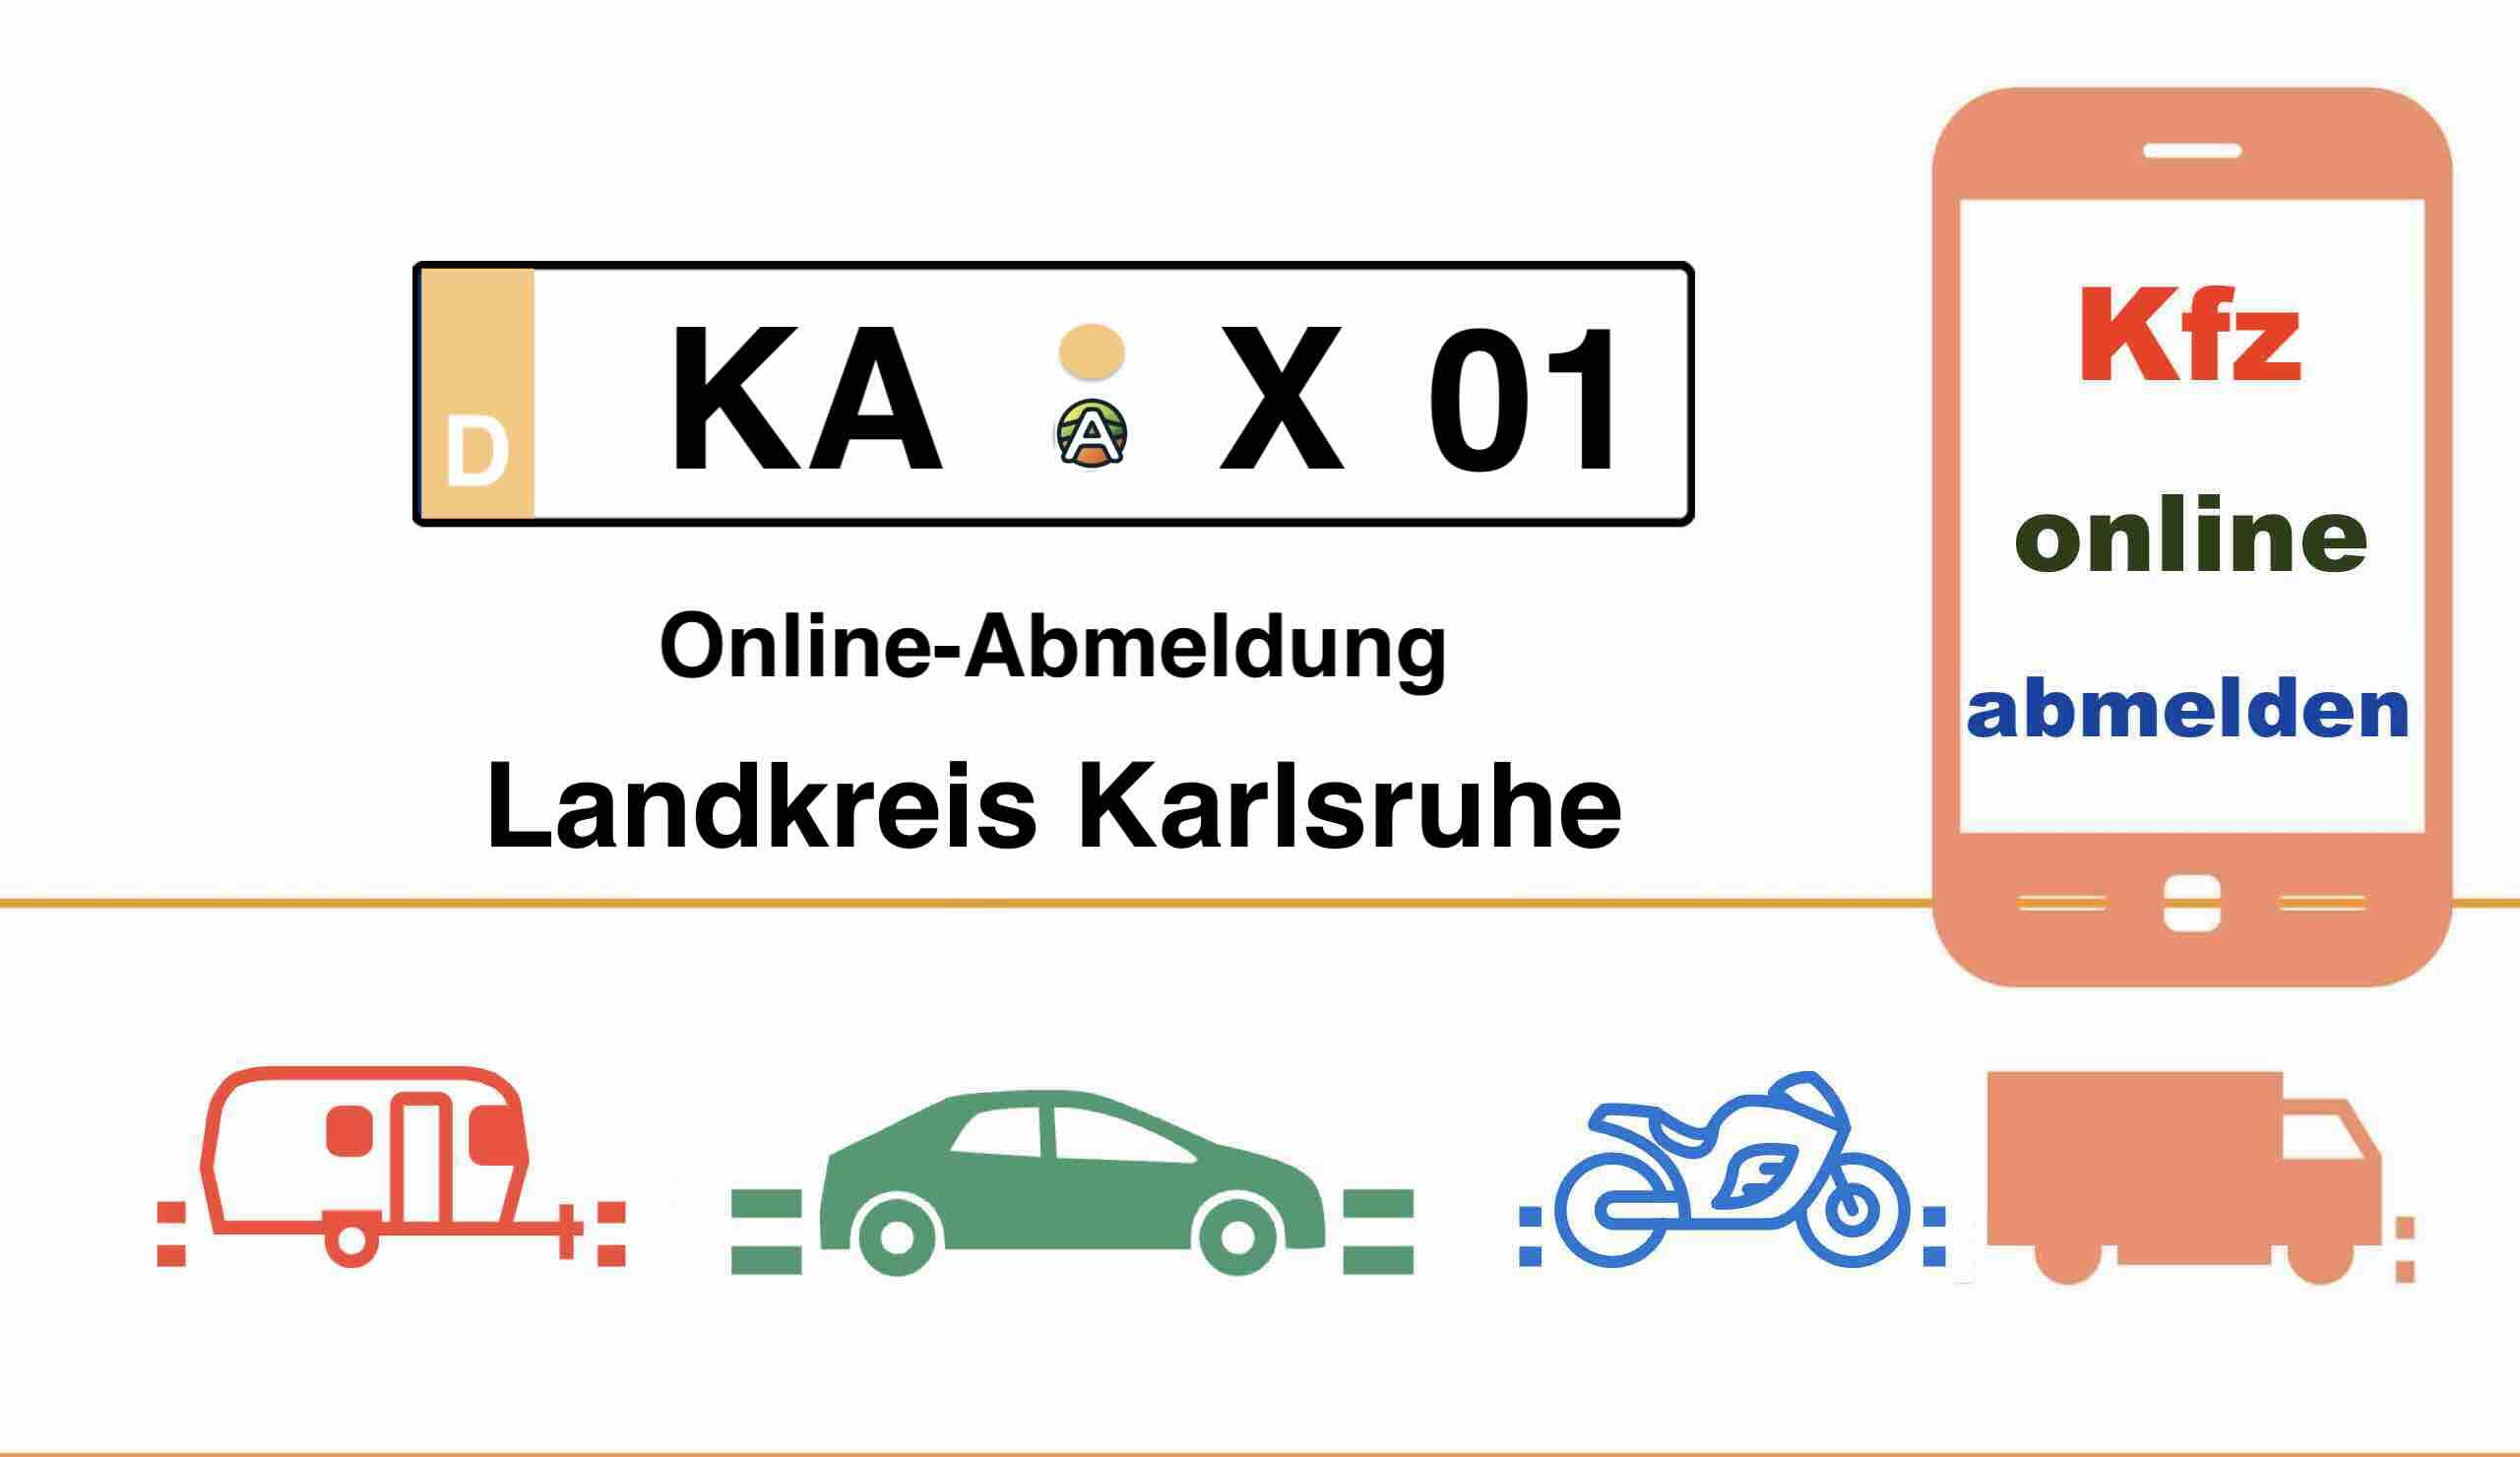 Kfz Online-Abmeldung im Landkreis Karlsruhe 